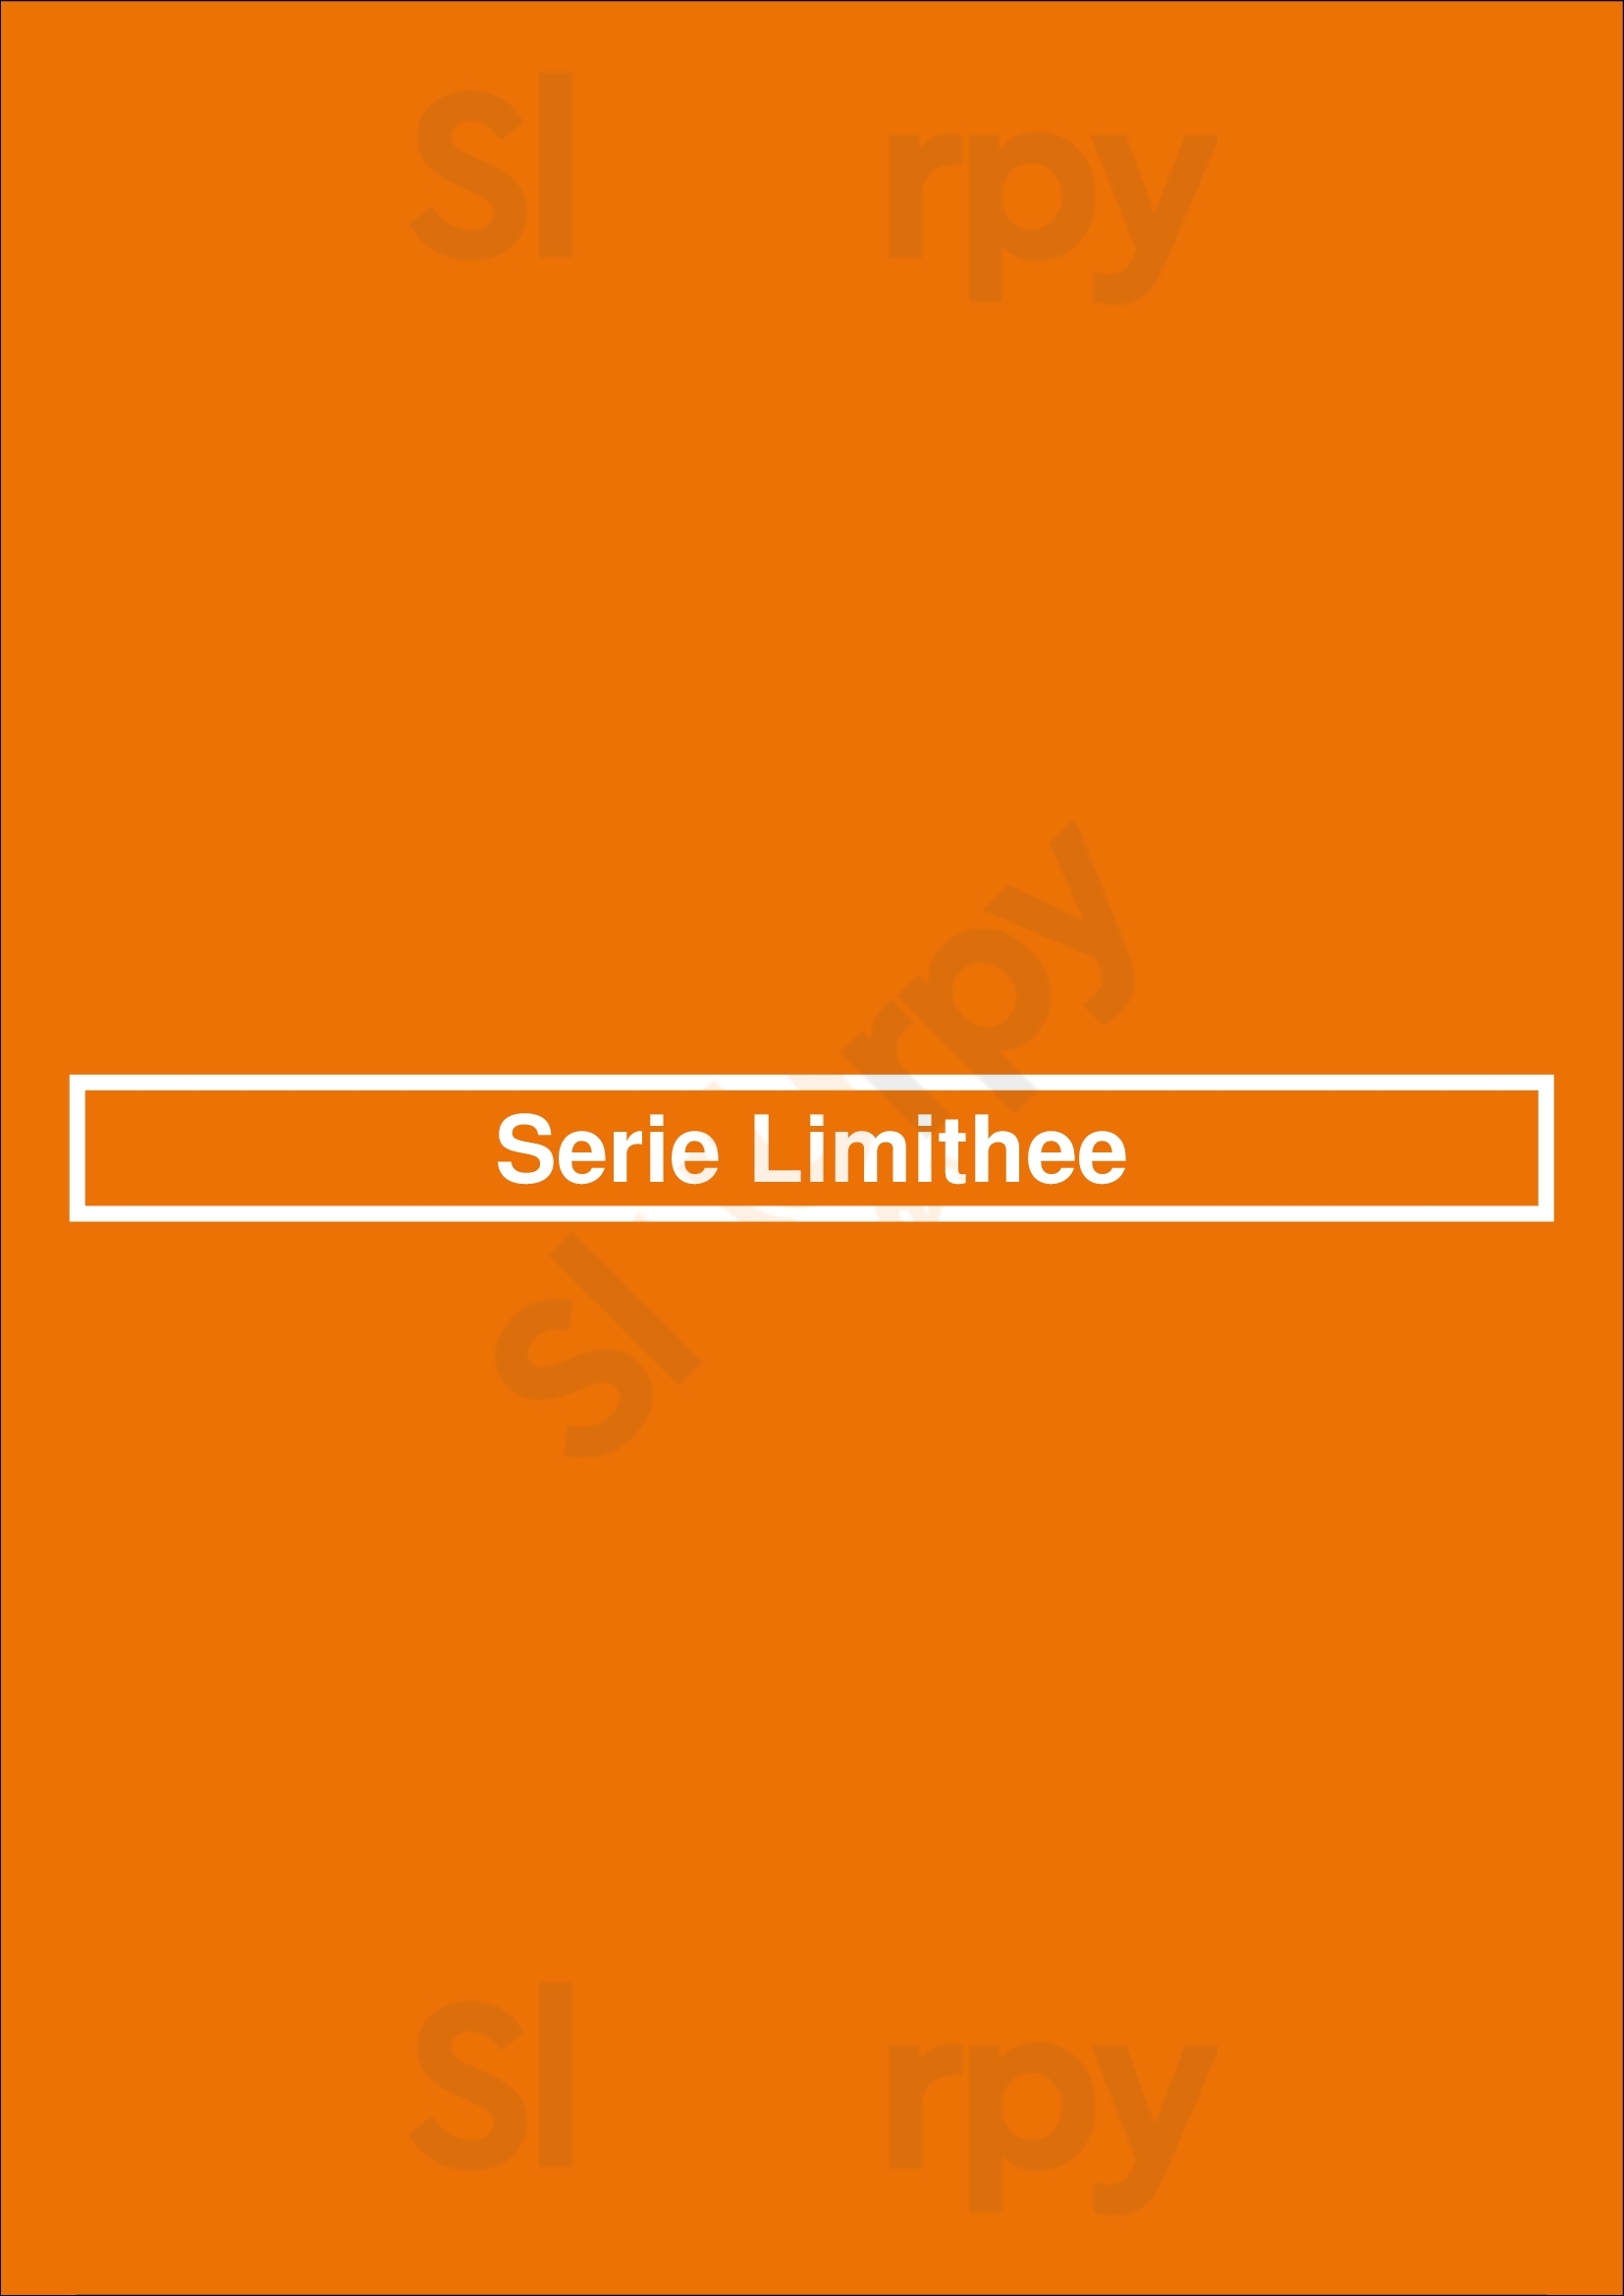 Serie Limithee Paris Menu - 1